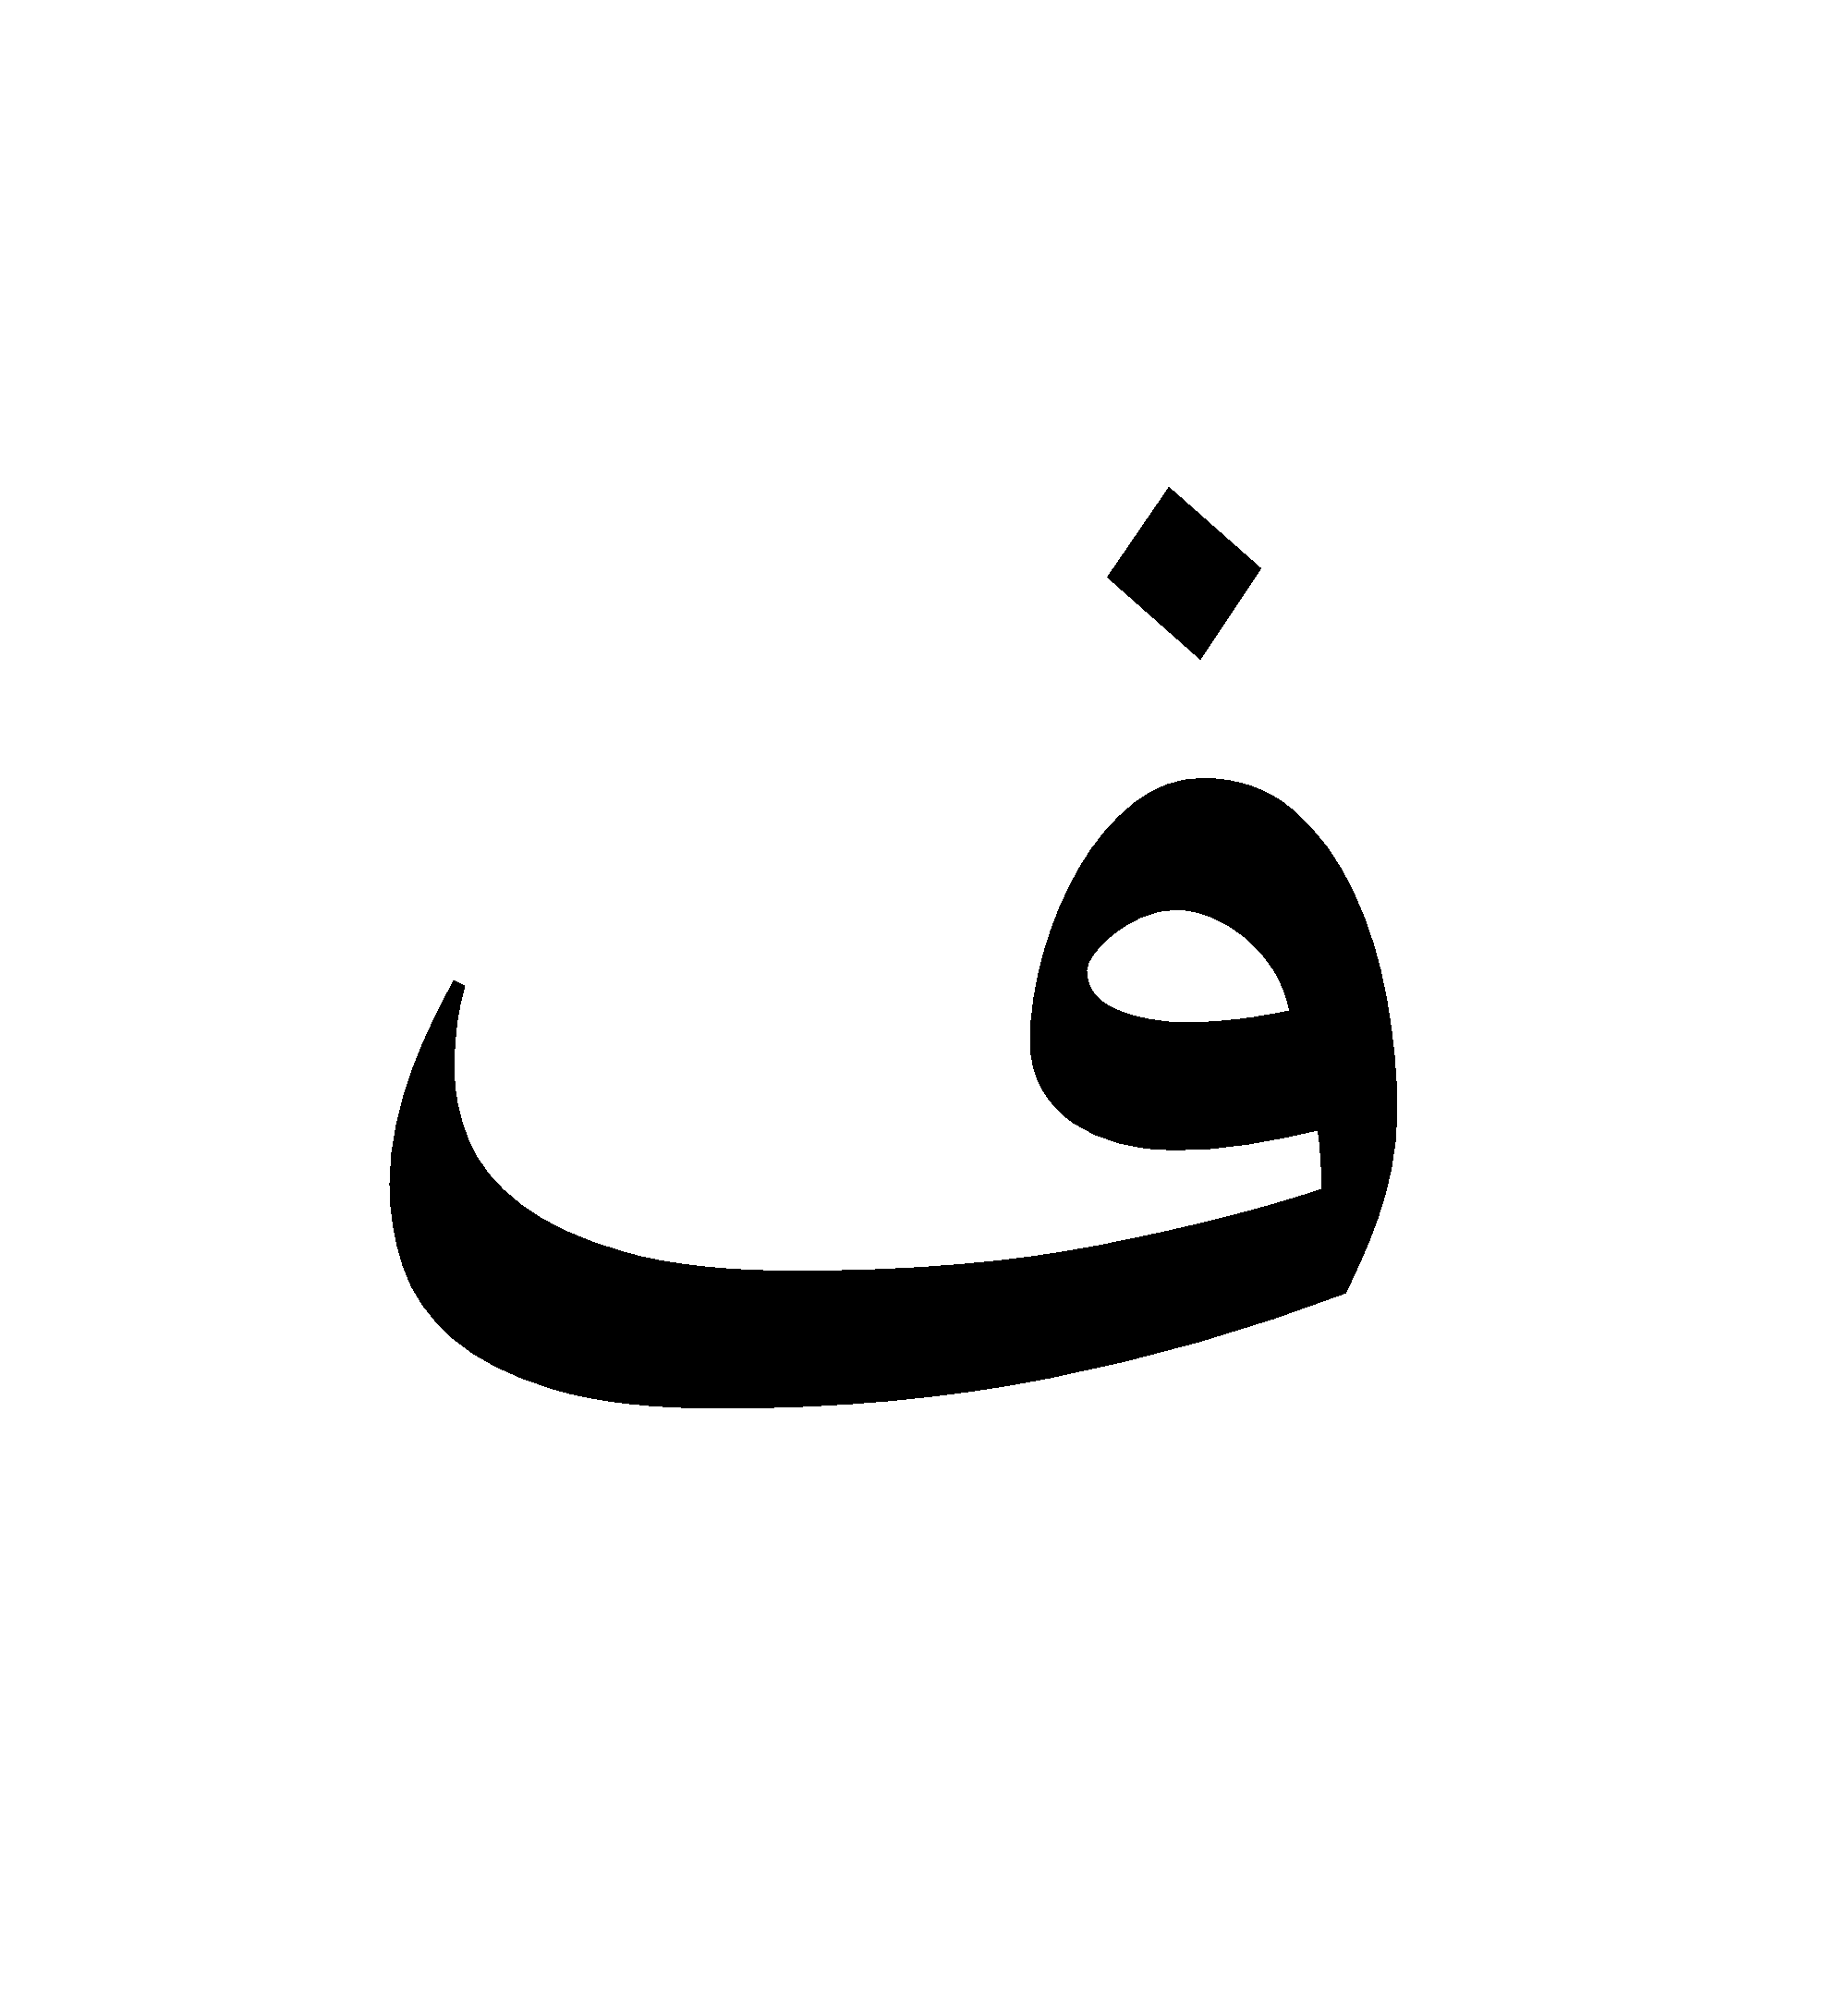 Арабские размеры. Буква Алиф на арабском. Арабская буква фа. Фа (буква арабского алфавита). Арабская буква са.